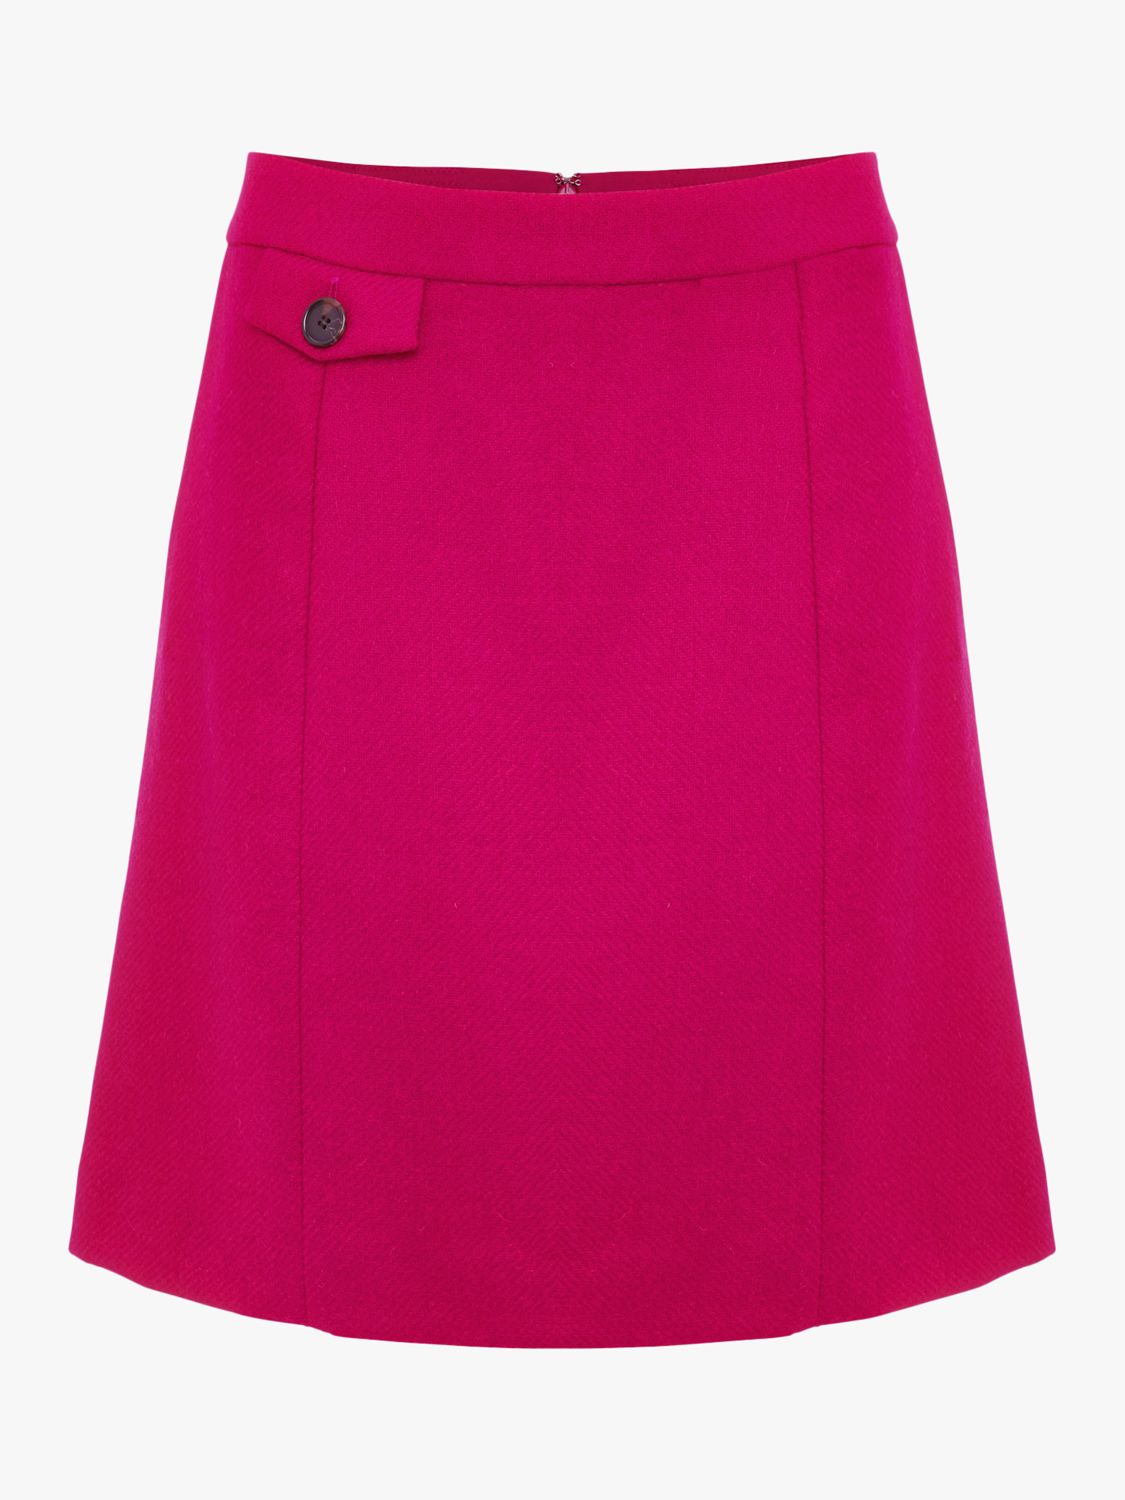 Hobbs Arianne Wool A-Line Skirt, Bright Pink